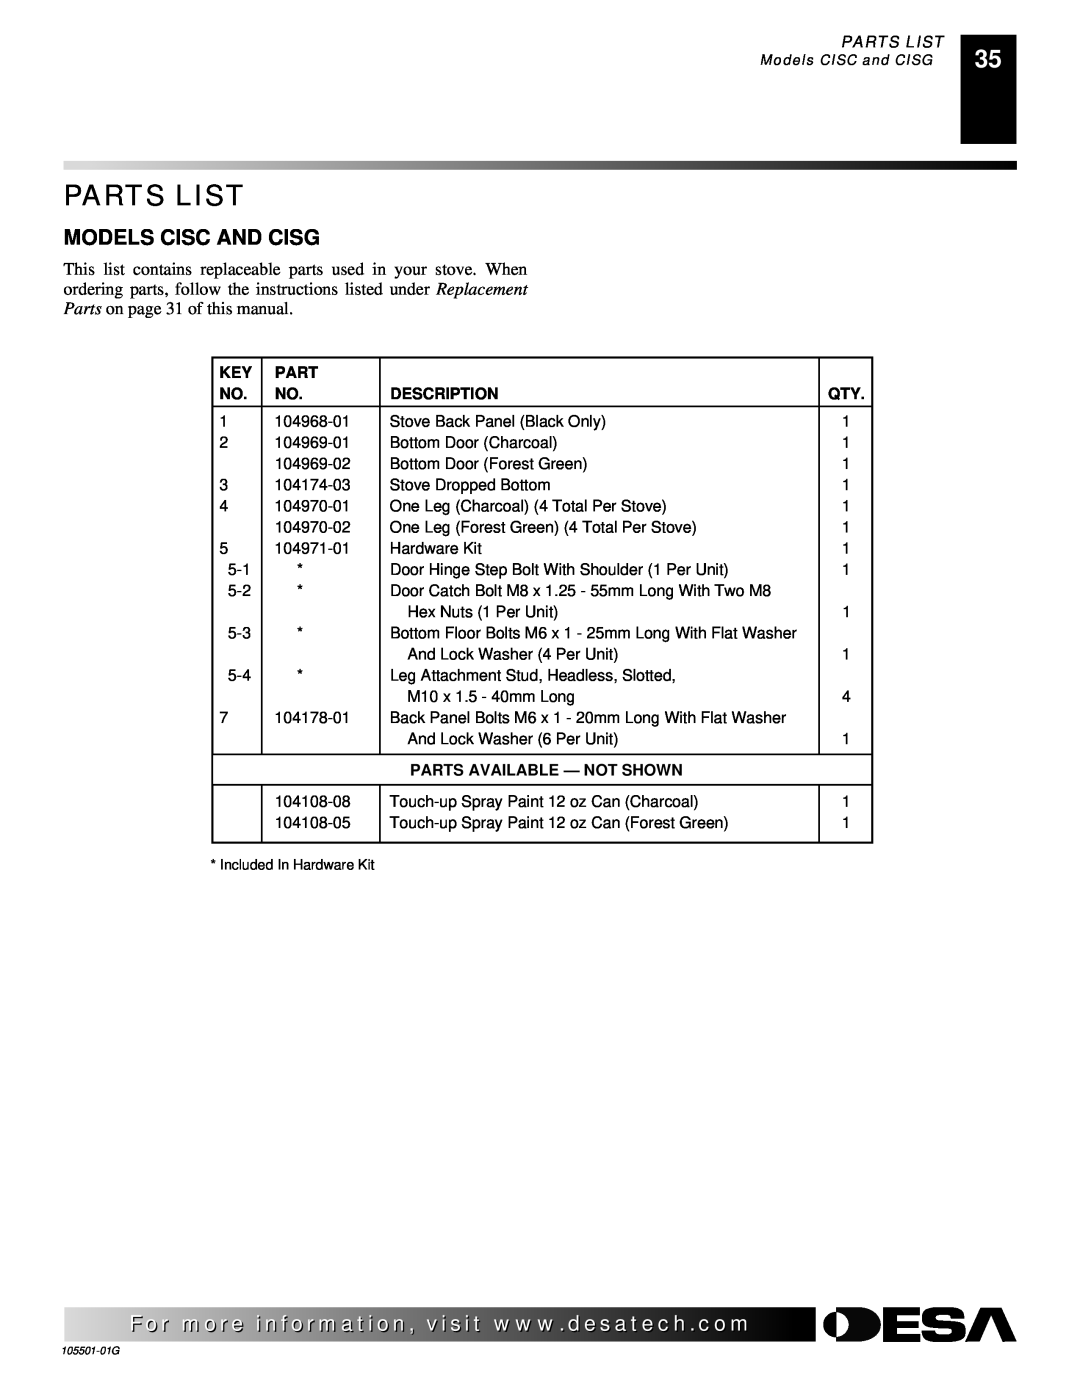 Desa Tech CDVBPC, CDVBNC manual Models Cisc And Cisg, Parts List, Description, Parts Available - Not Shown 